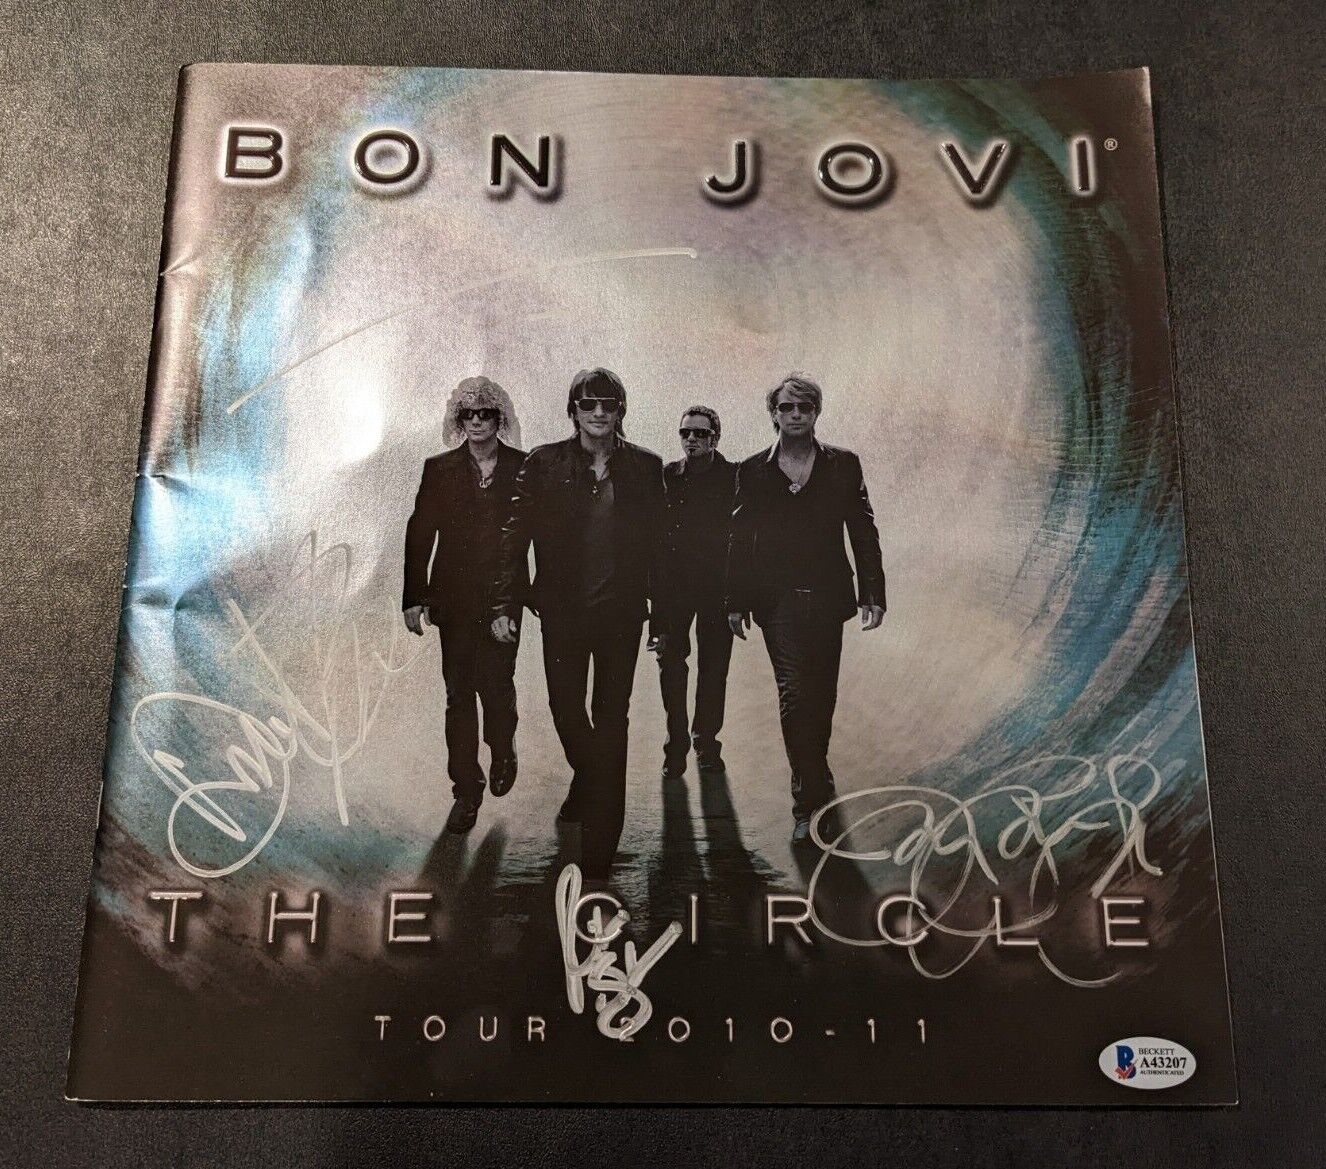 Bon Jovi Signed Autographed "the Circle" Tour Program Beckett Loa (bas) 🎁